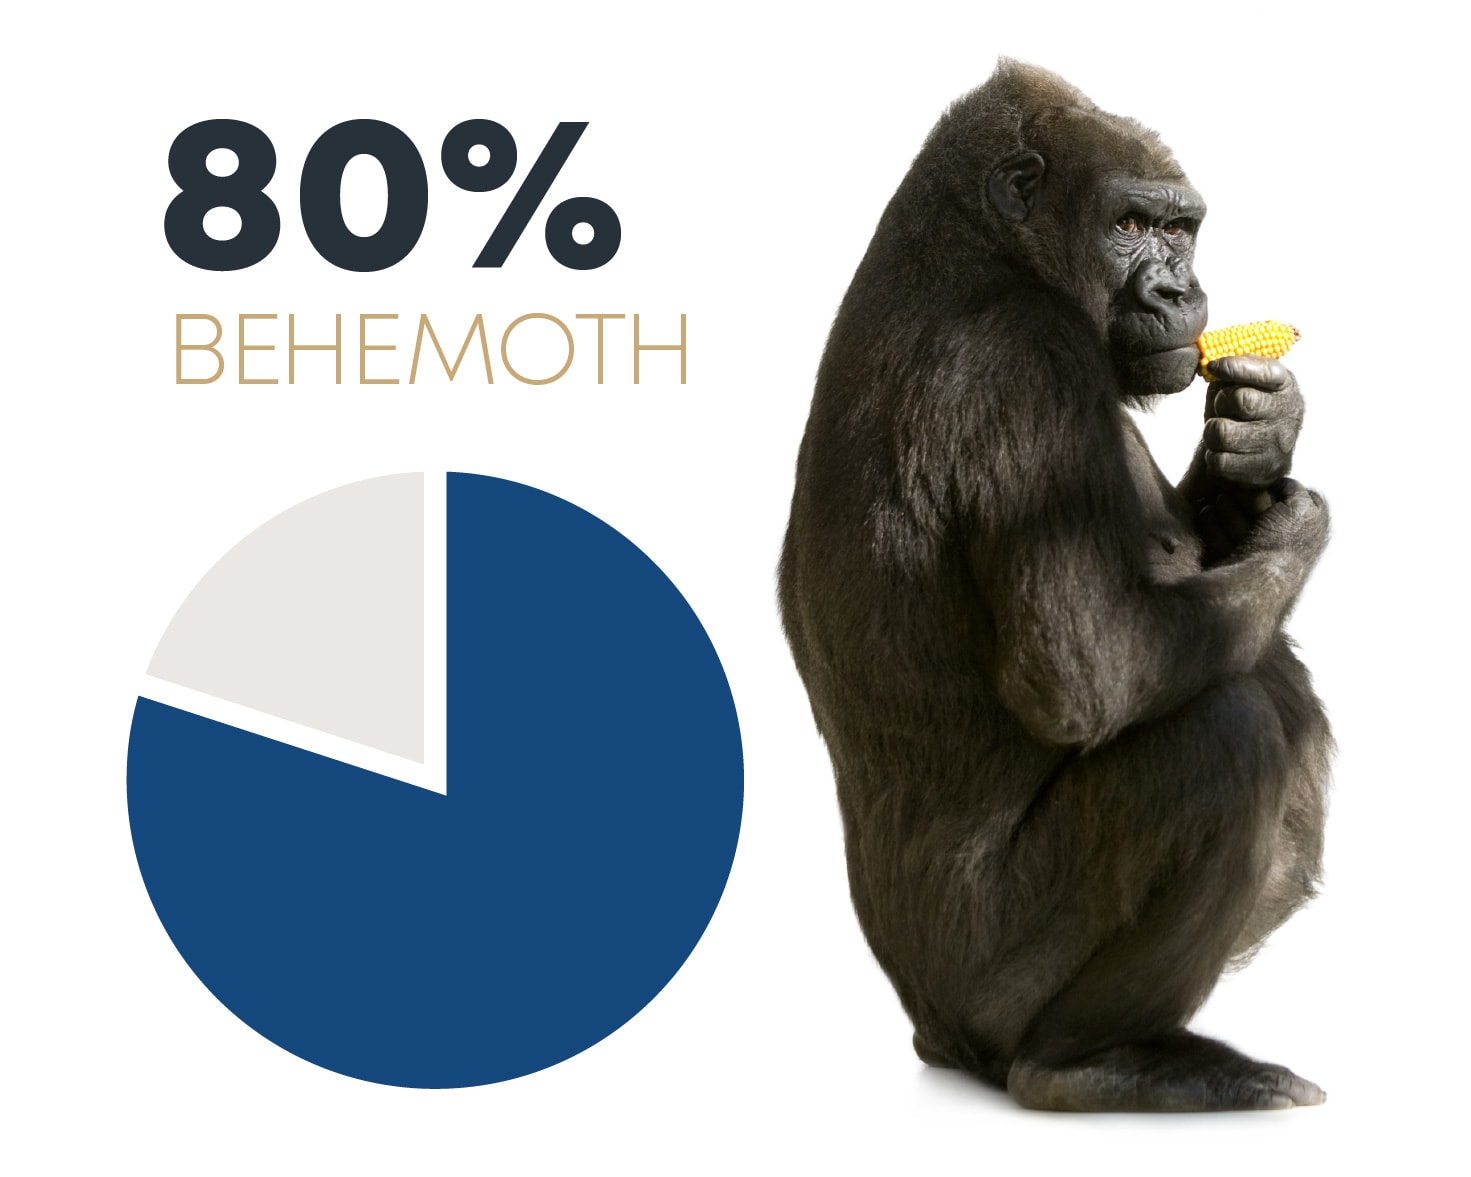 80% behemoth pie chart